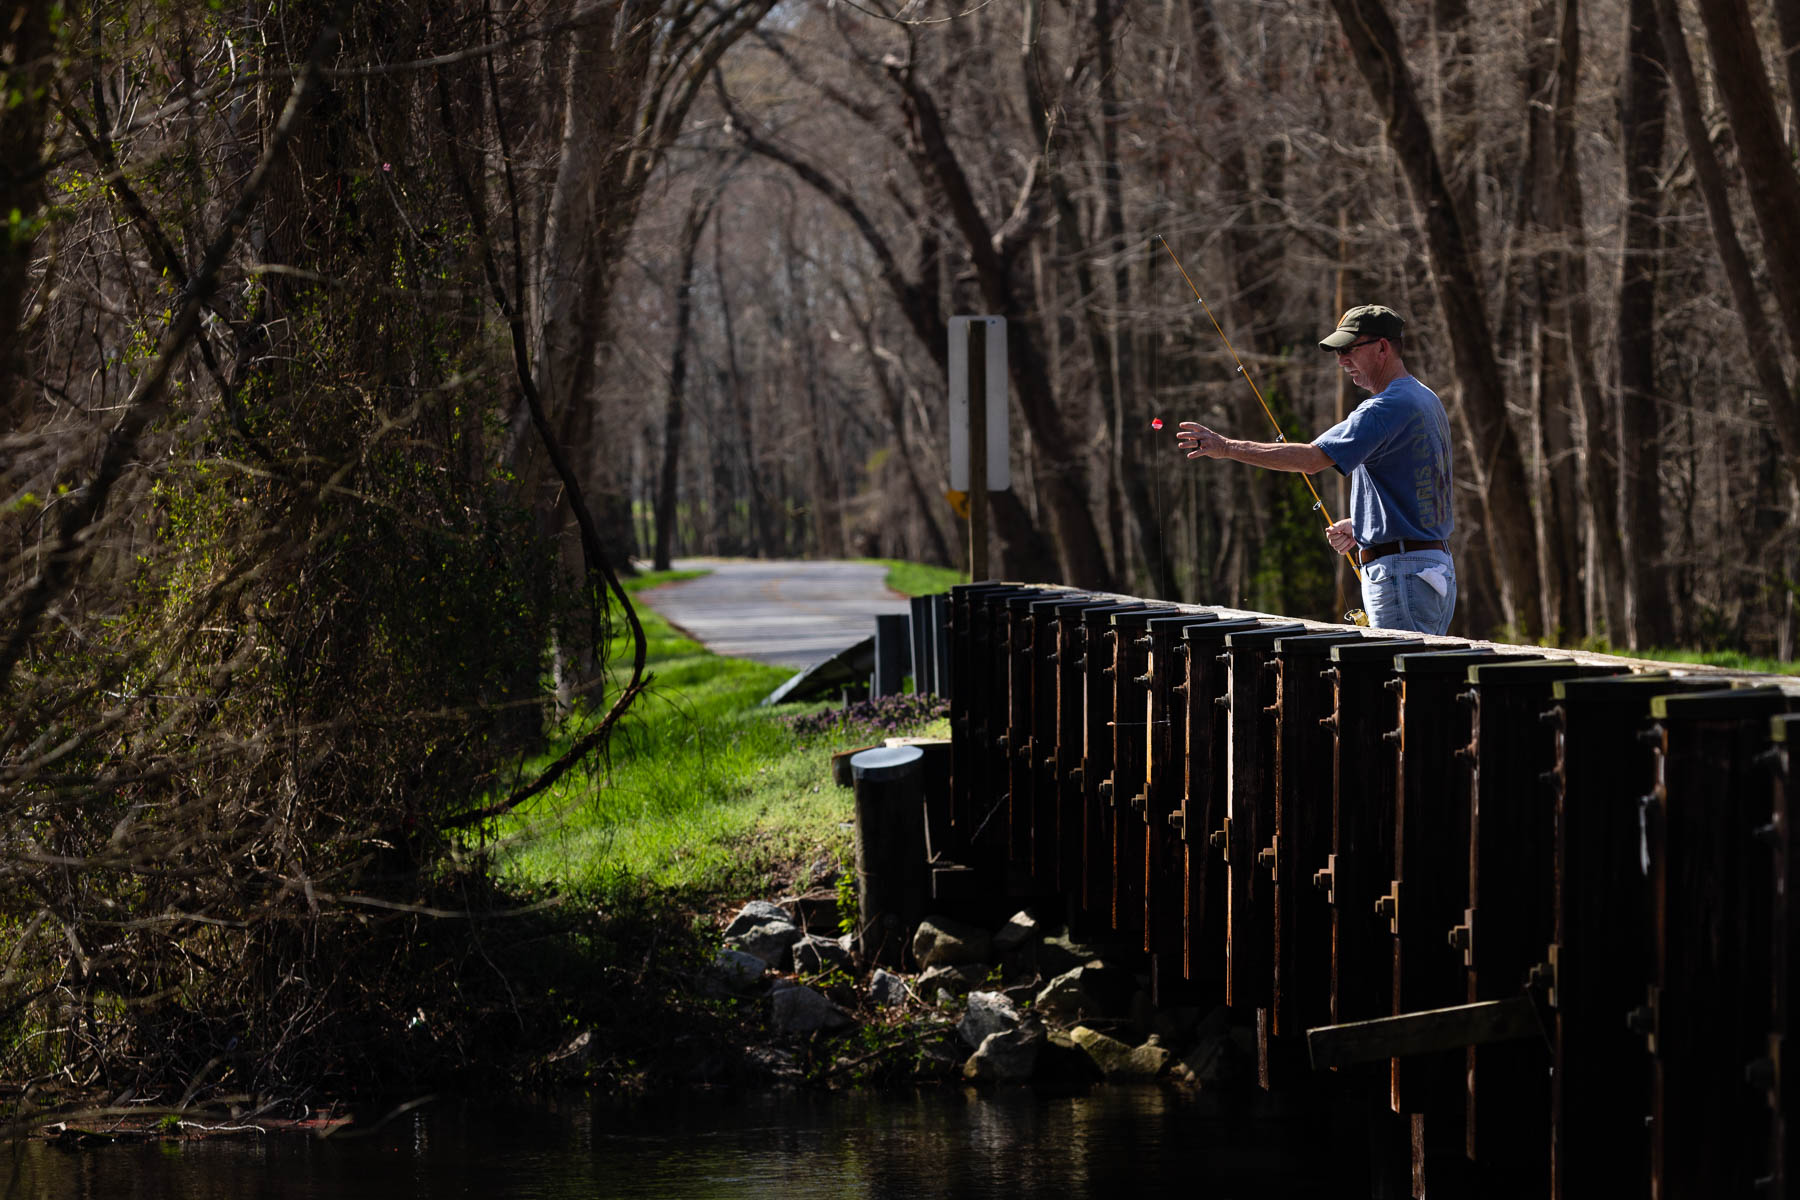 Man fishing in the Pocomoke River.